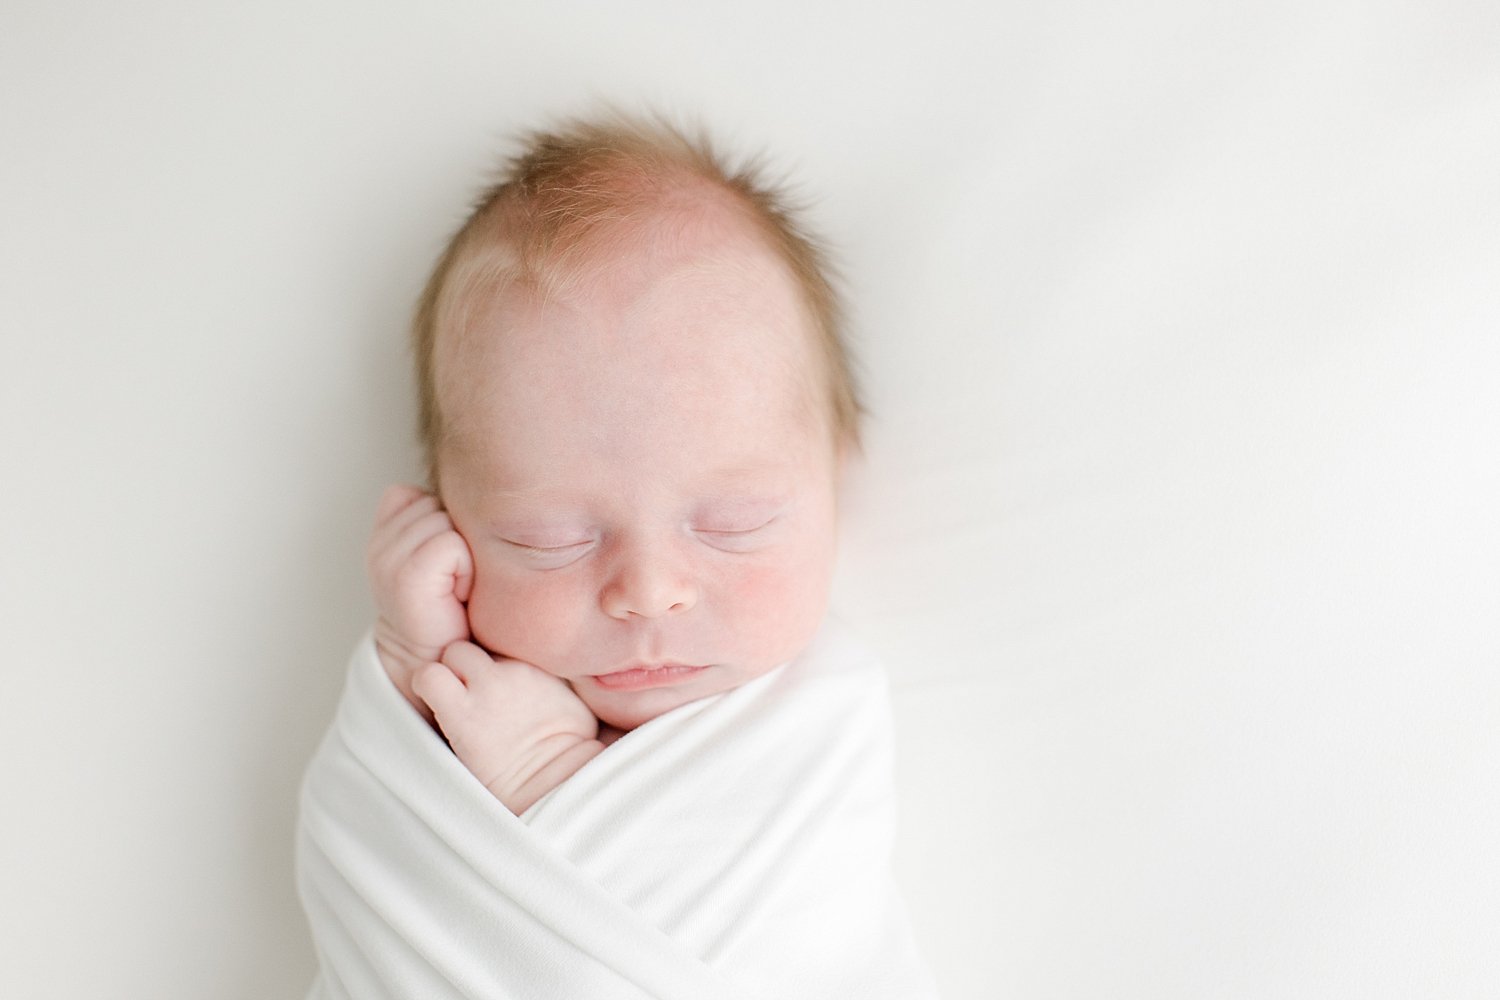 Baby swaddled on back for newborn photos | Kristin Wood Photography